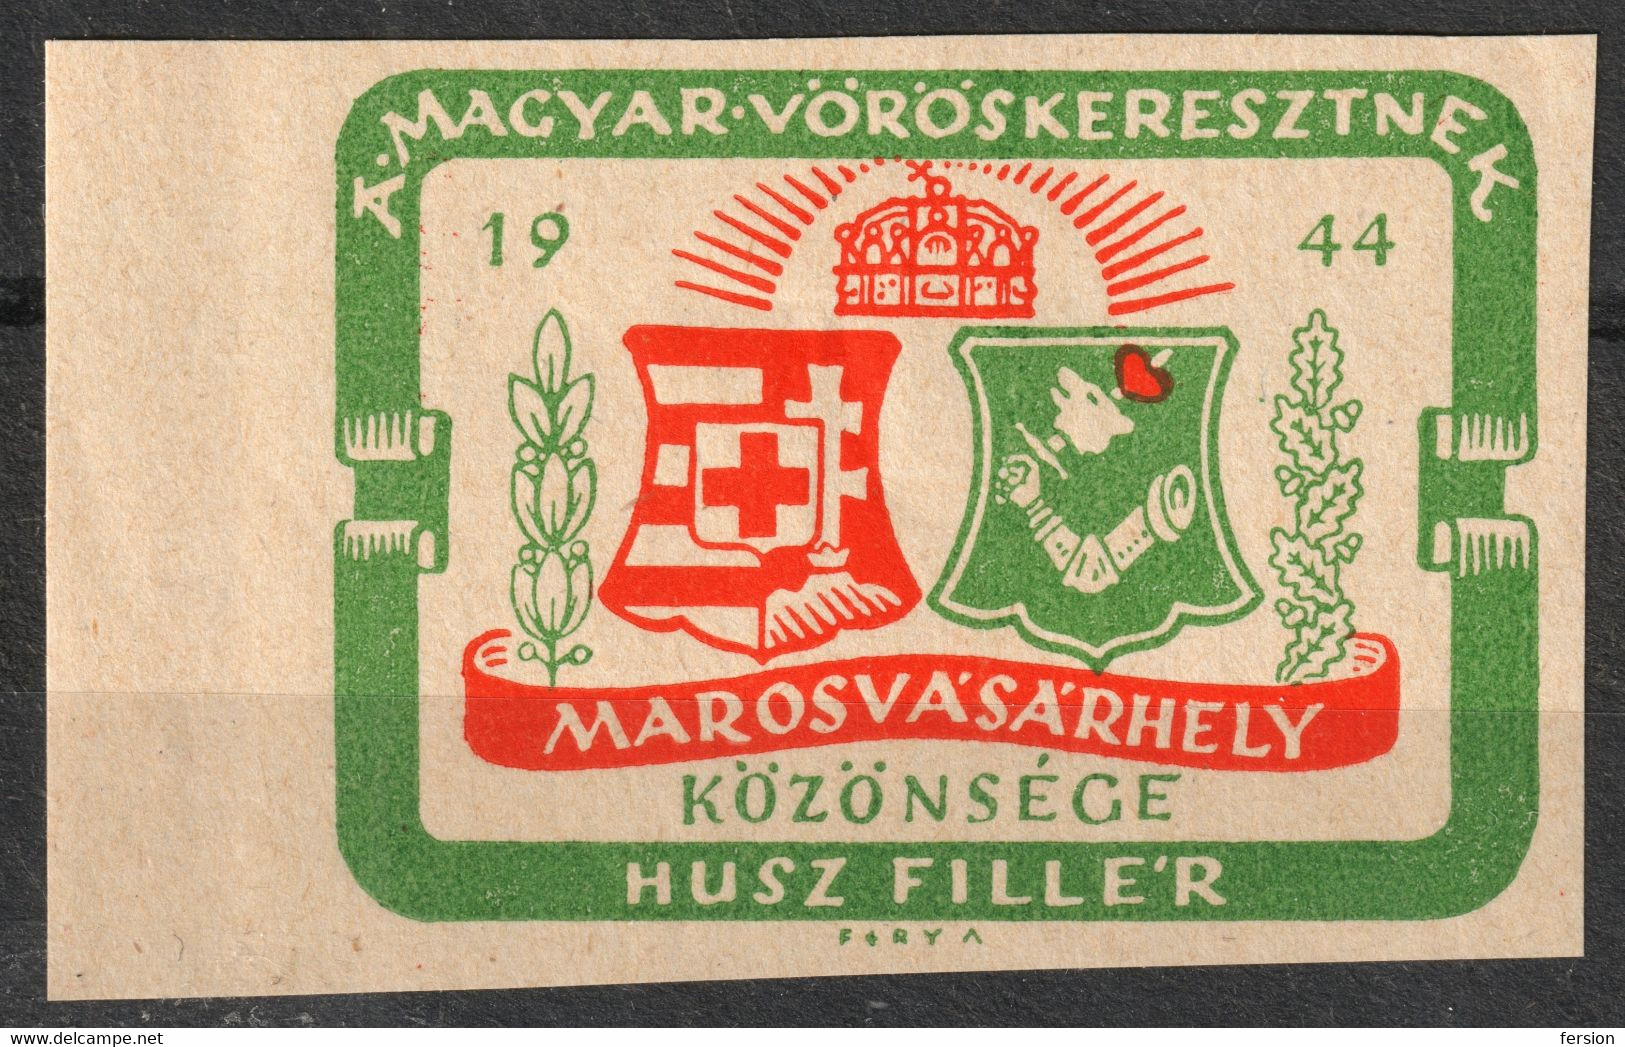 Marosvásárhely Târgu Mureș 1944 HUNGARY Red Cross Romania Erdély Transylvania Occupation Vignette Label Imperforated - Transylvania